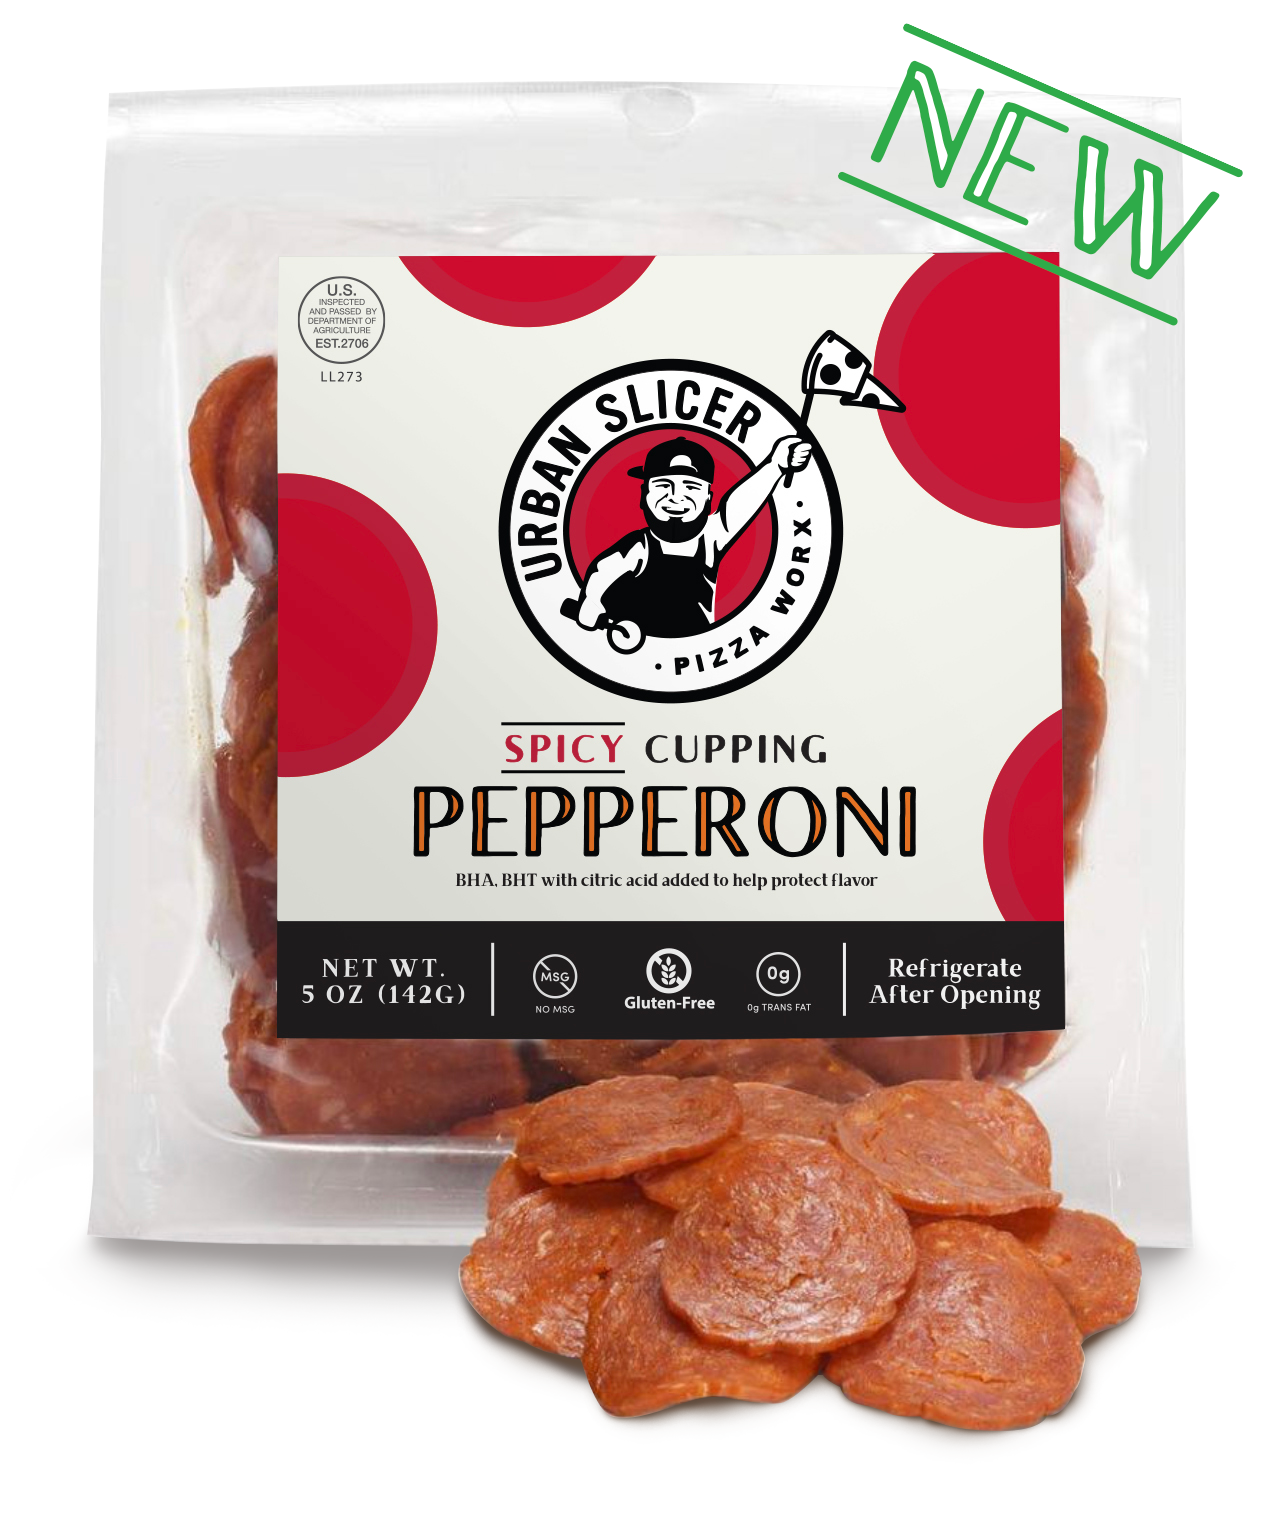 H-E-B Pepperoni Slices - Shop Meat at H-E-B